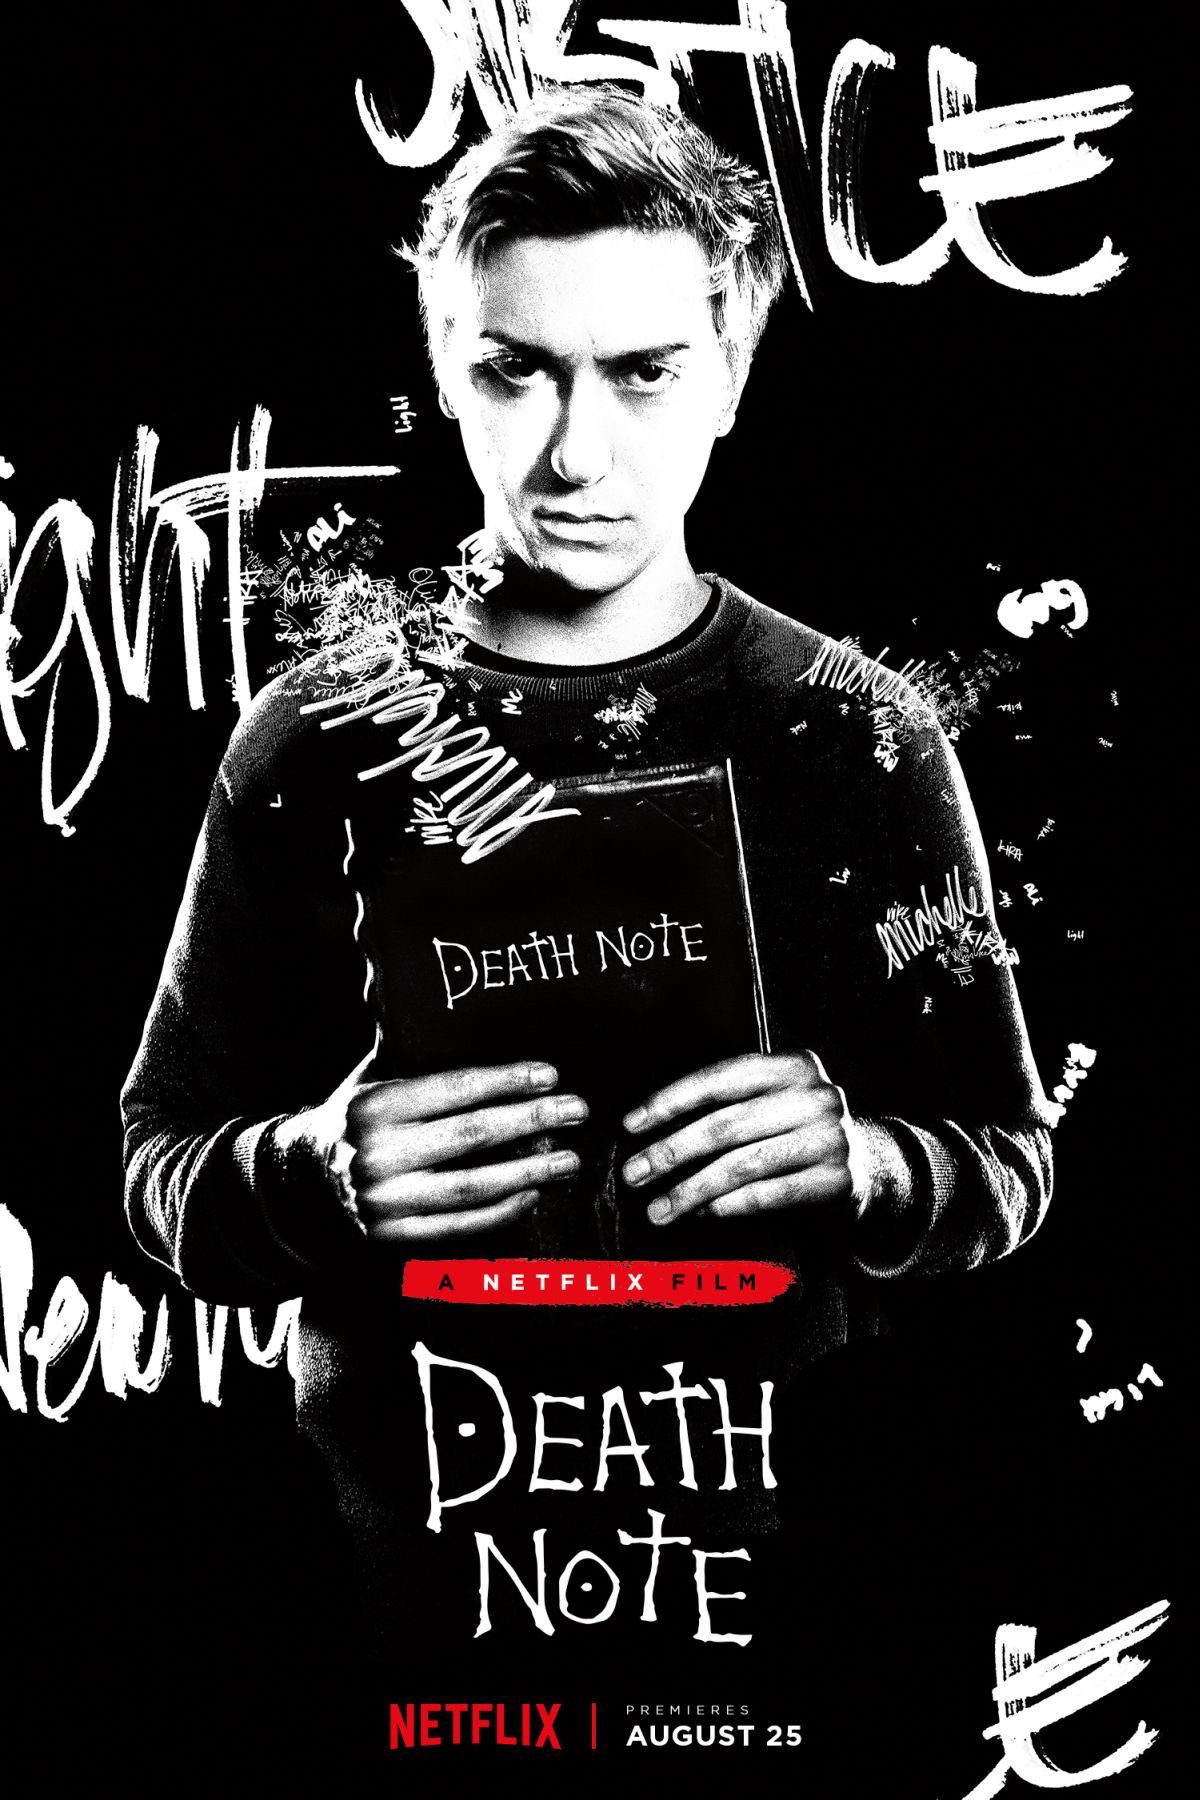 Death Note vira manchete na revista de cinema internacional